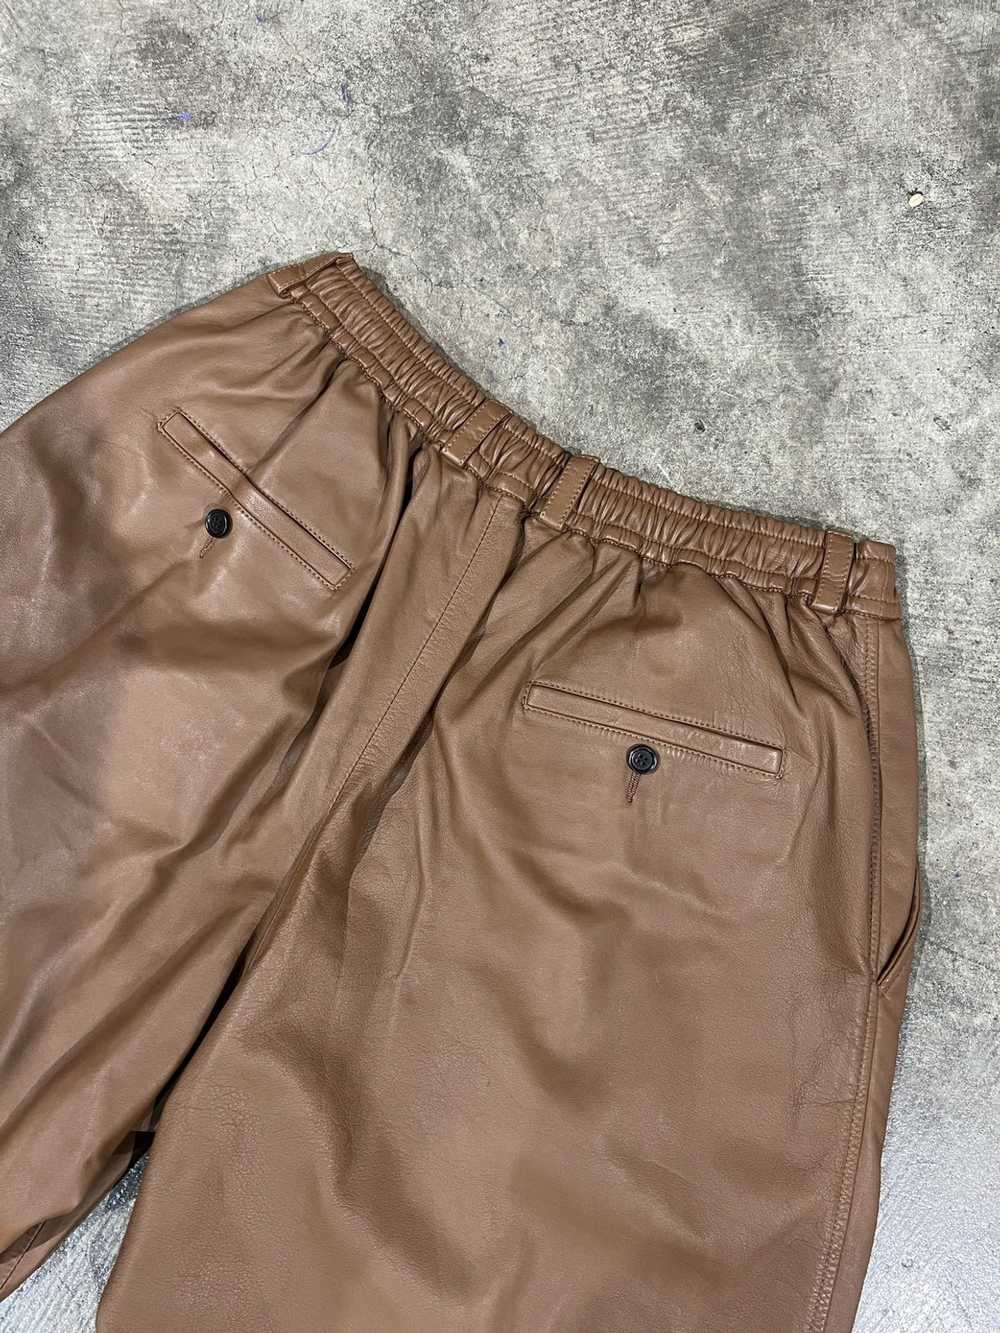 Marni Marni Leather Shorts - image 4